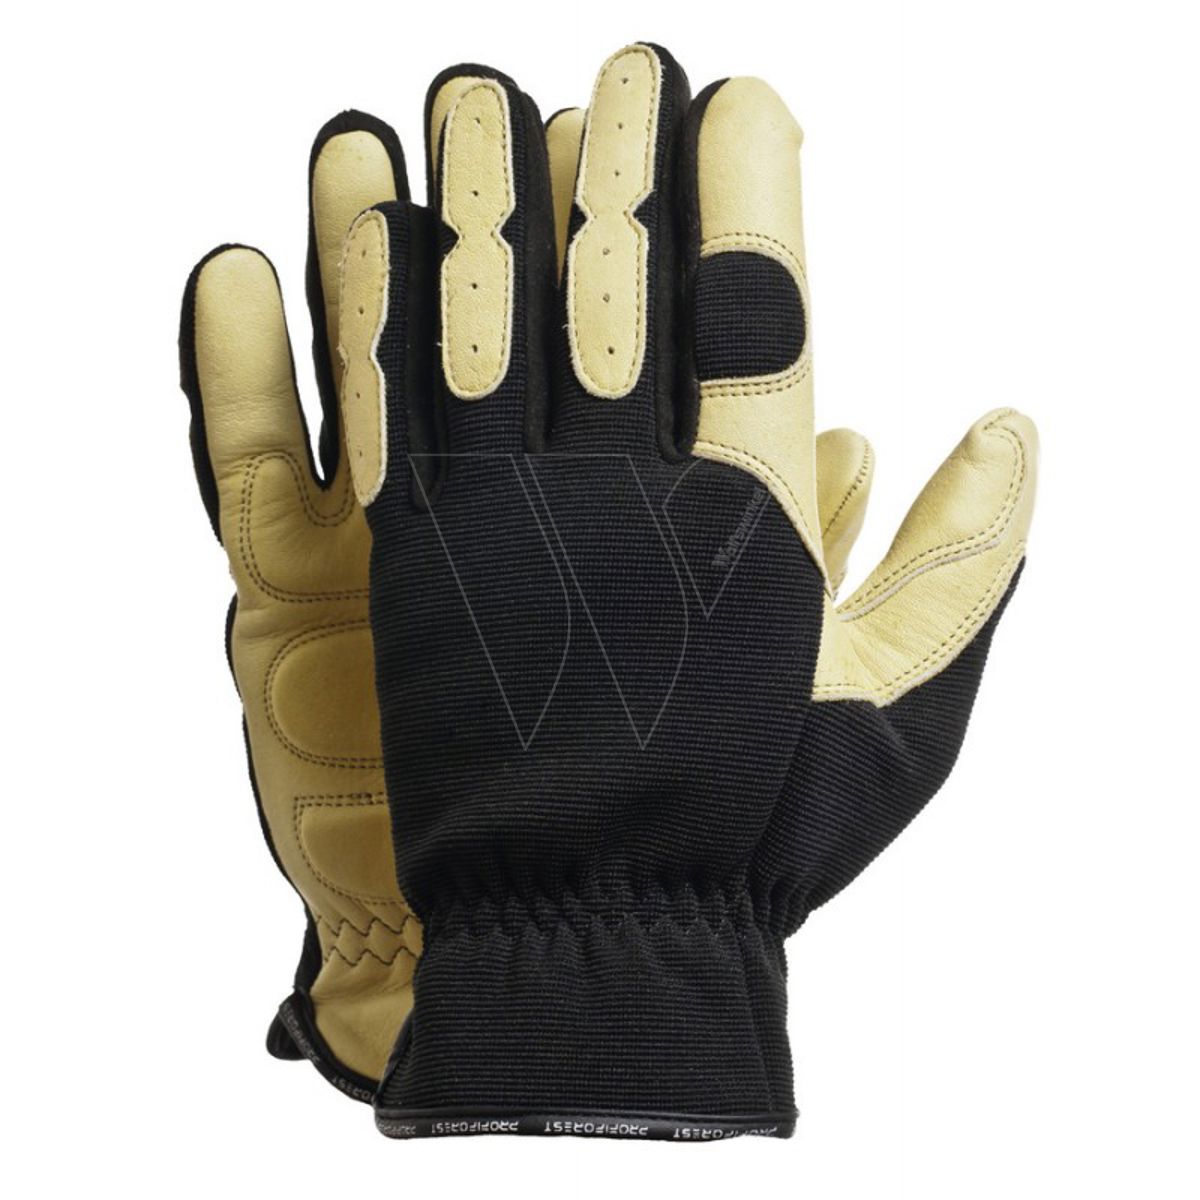 Profiforest antivibration glove 8